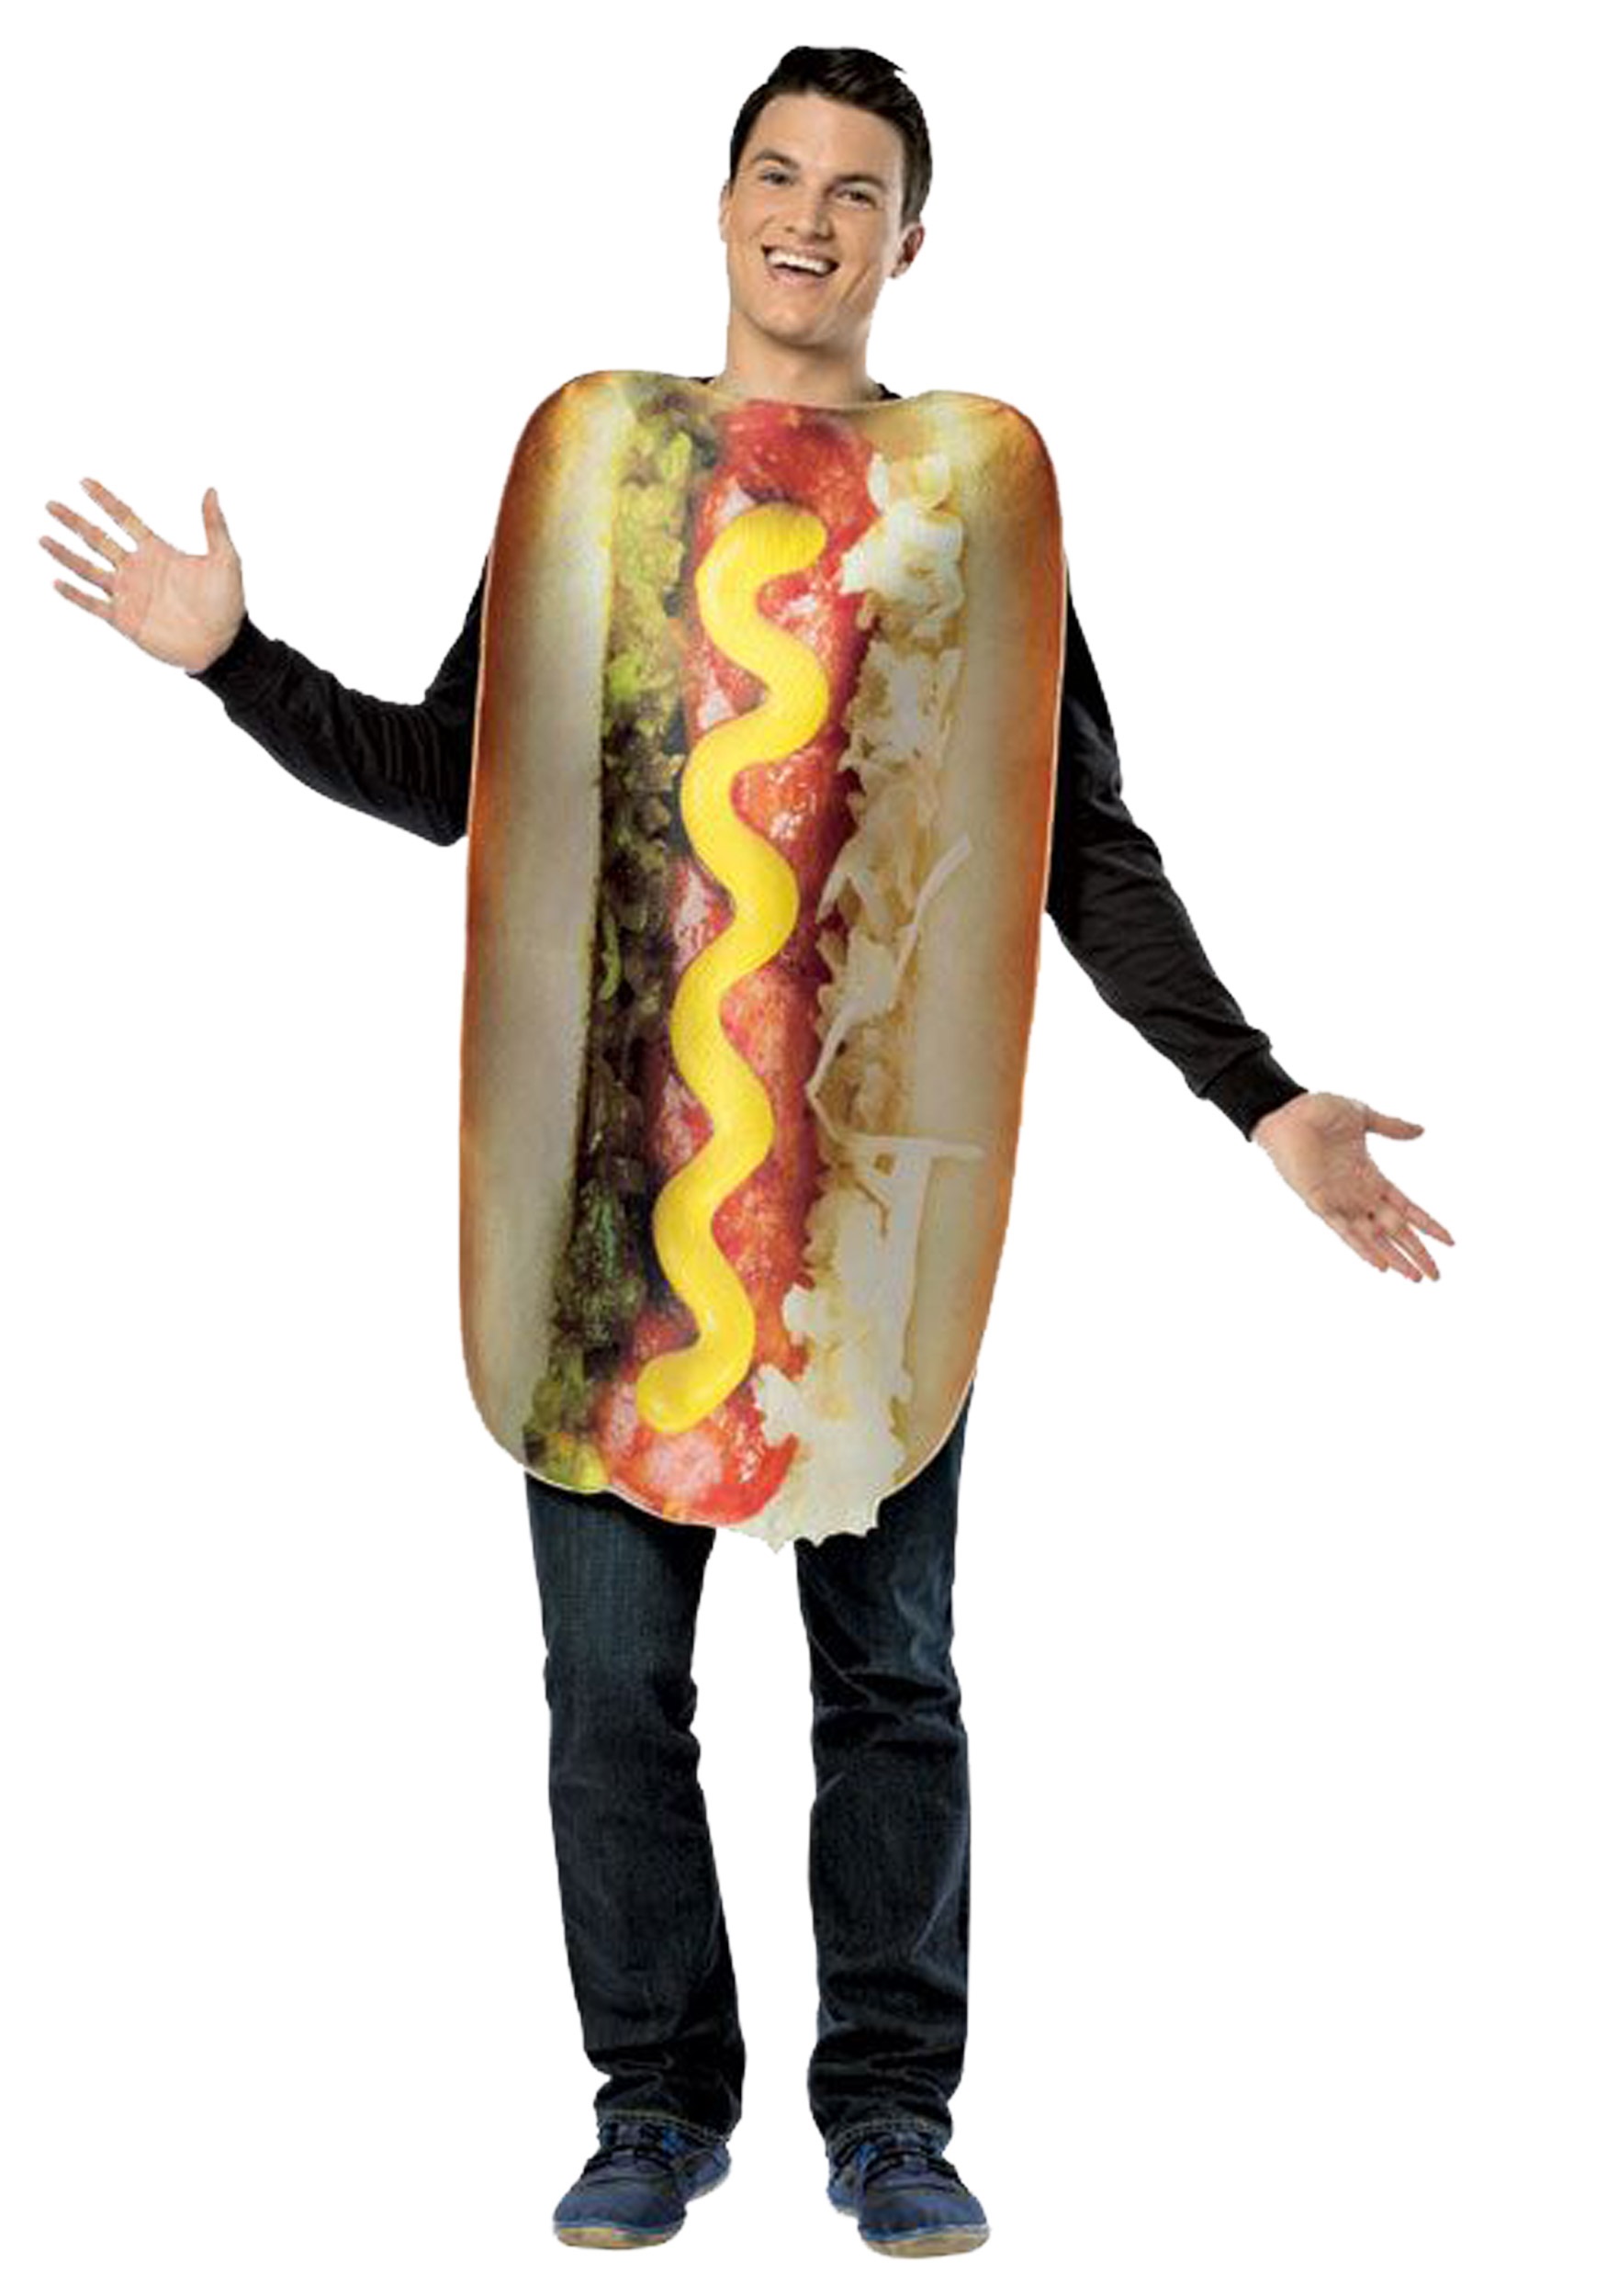 Hallowiener Hot Dog Hotdog Footy Match Food Humour Bucks Hen Night Men Costume 